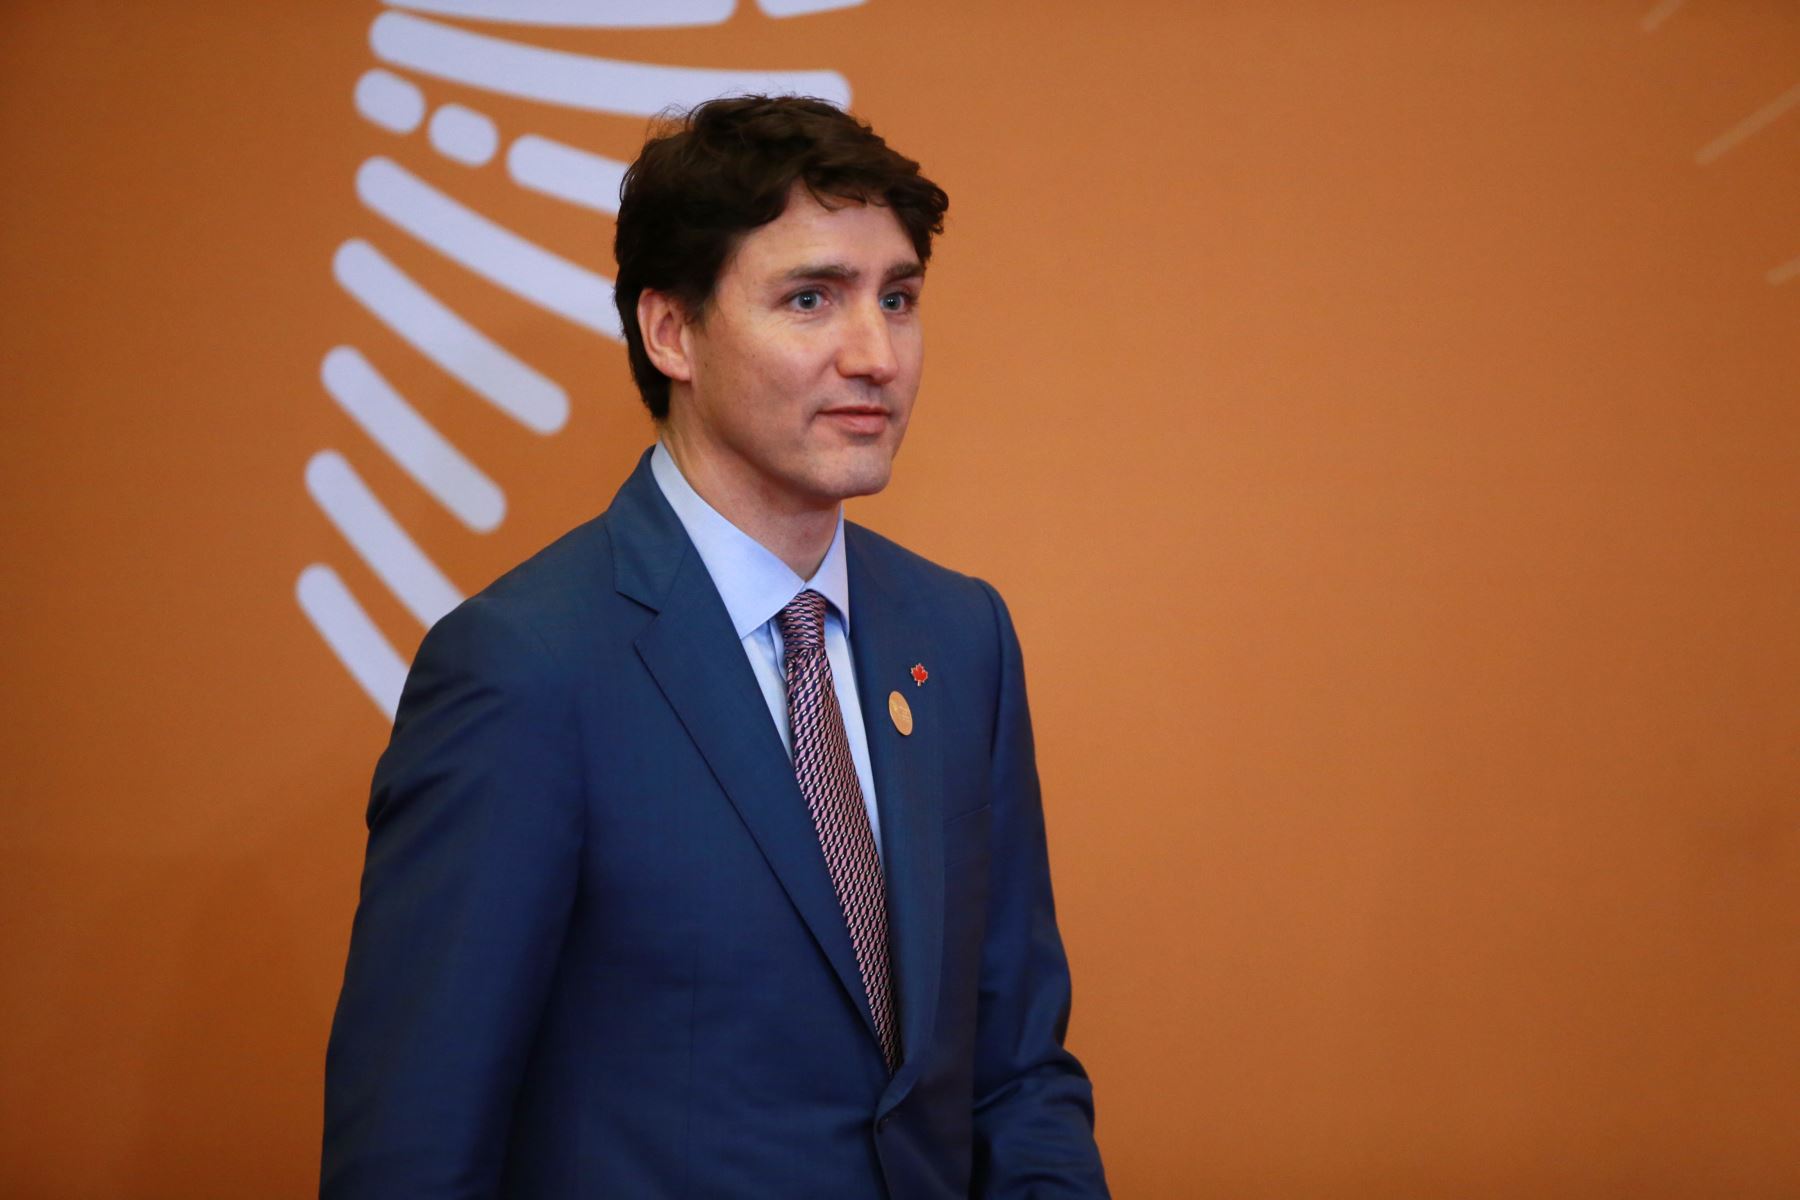 Primer ministro de Canadá, Justin Trudeau. Foto: ANDINA/Jhony Laurente.